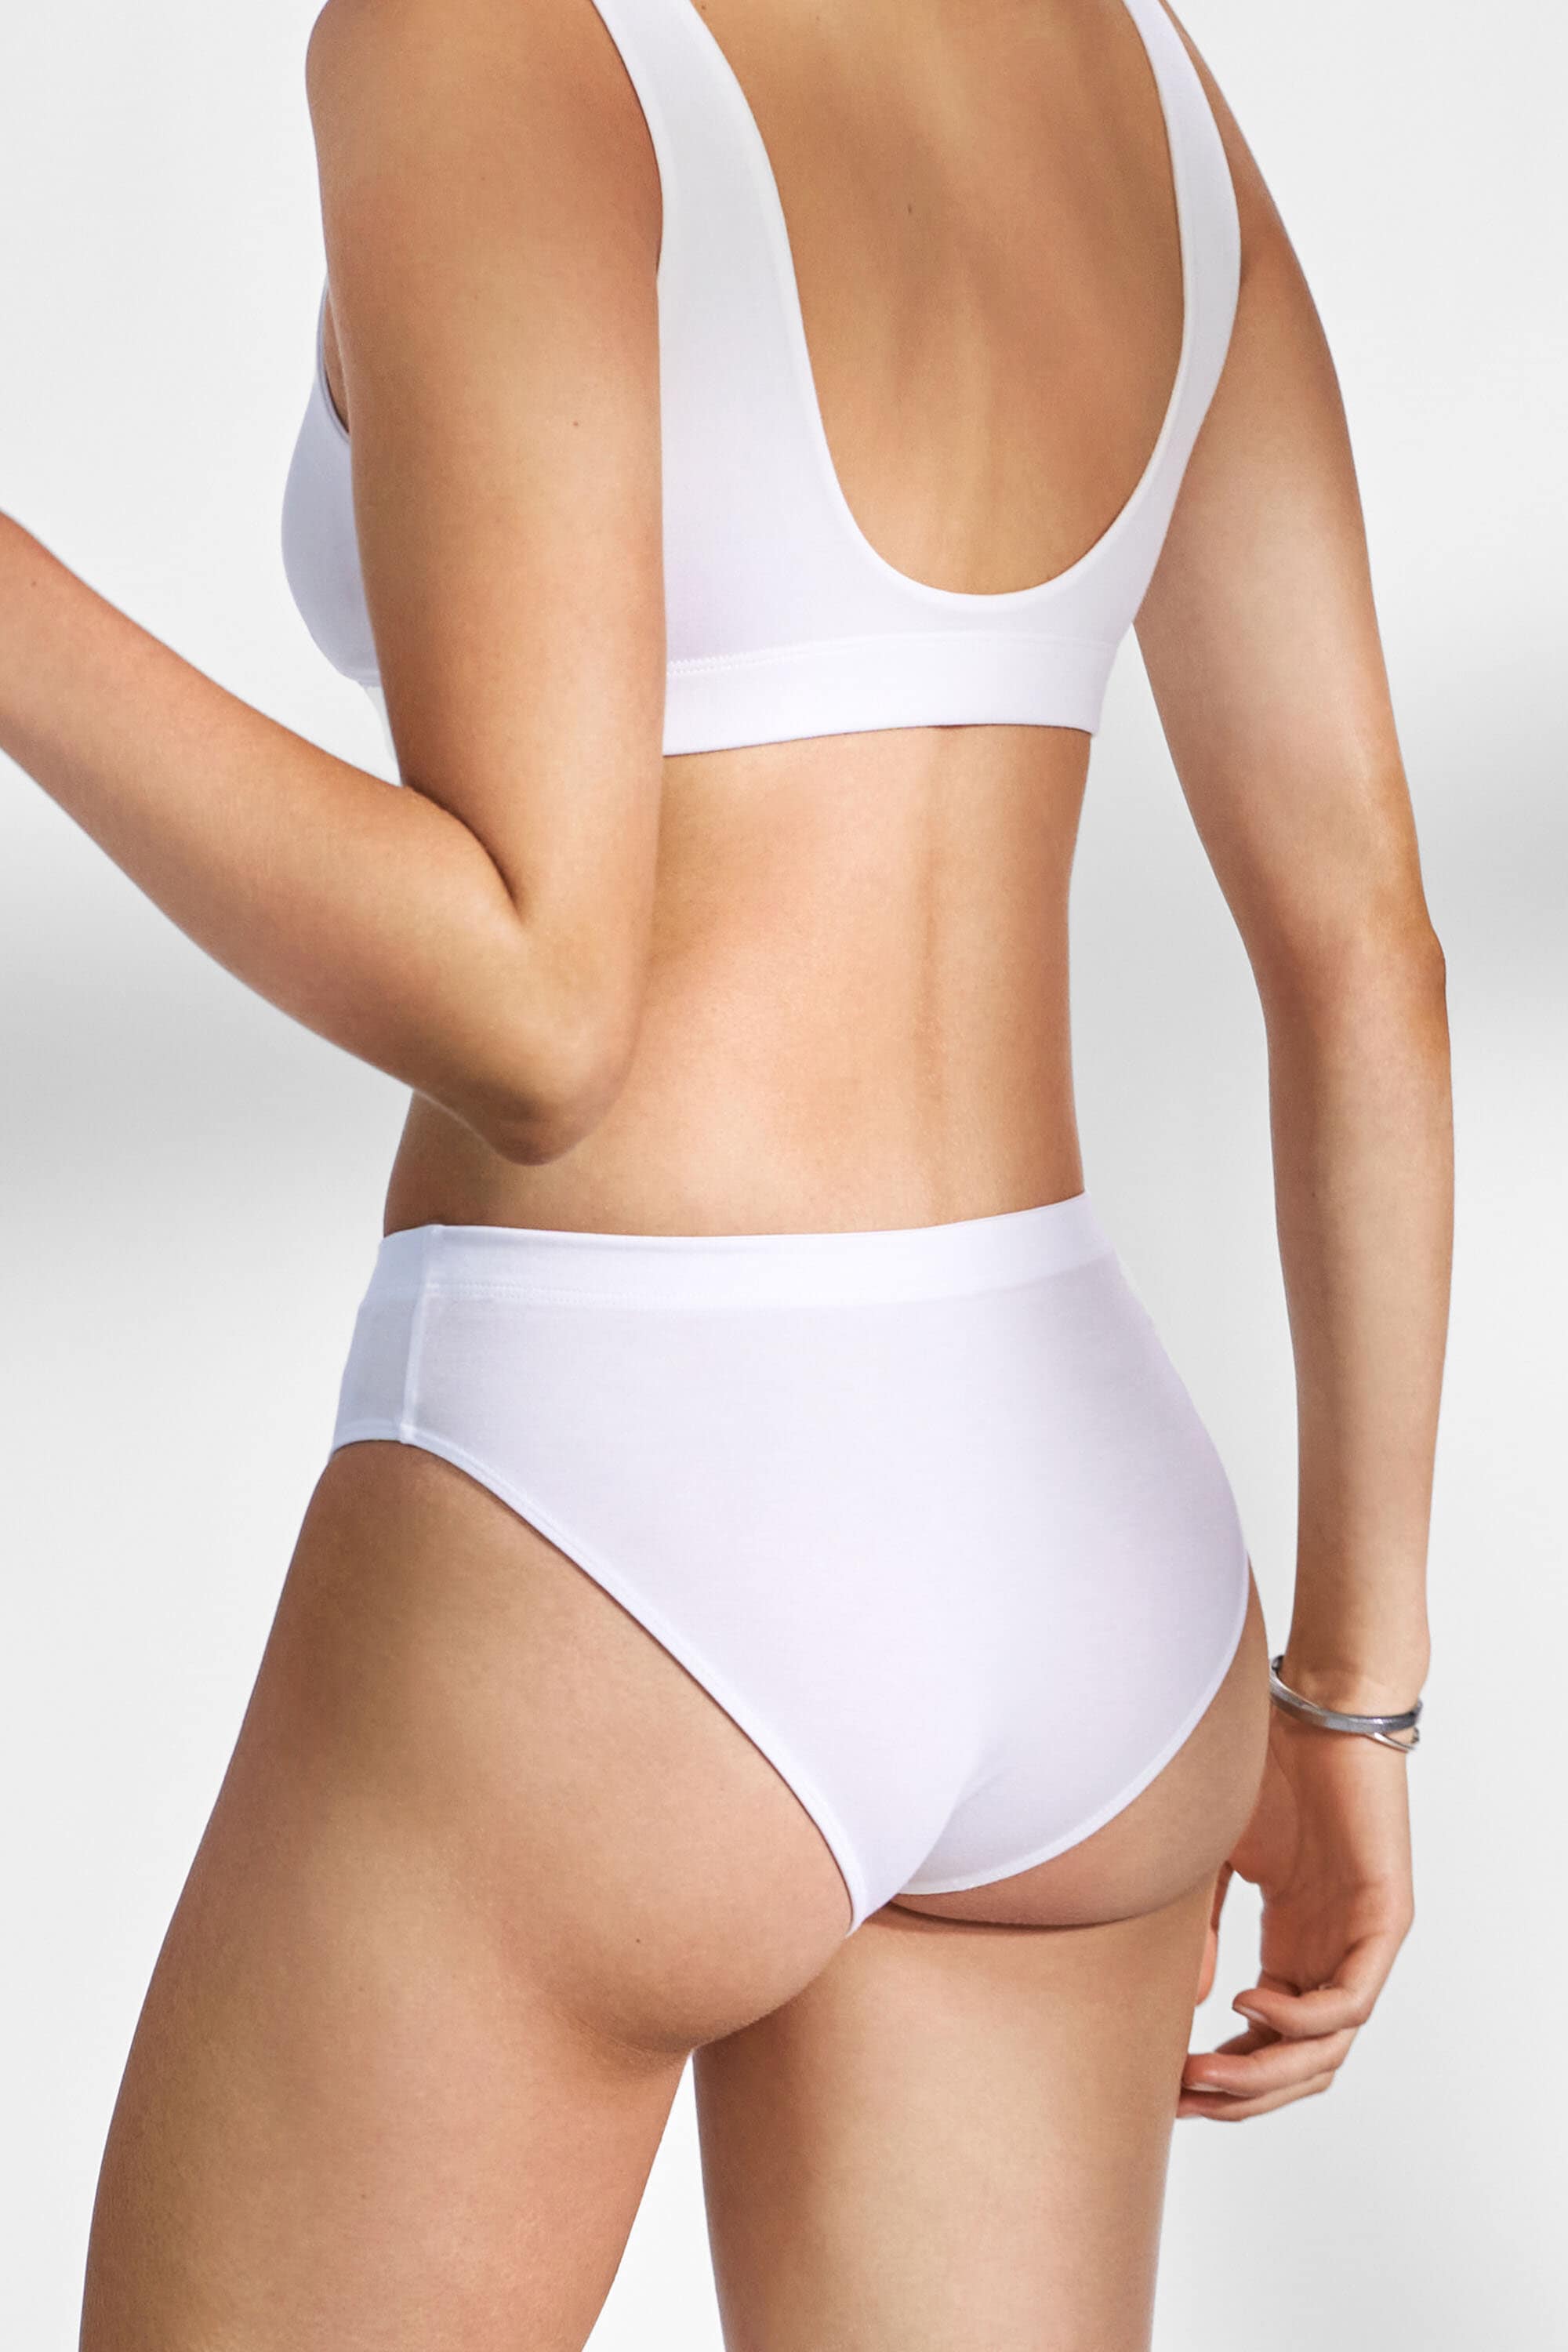 Hom PLUMES MICRO BRIEF White - Fast delivery  Spartoo Europe ! - Underwear  Underpants / Brief Men 39,00 €